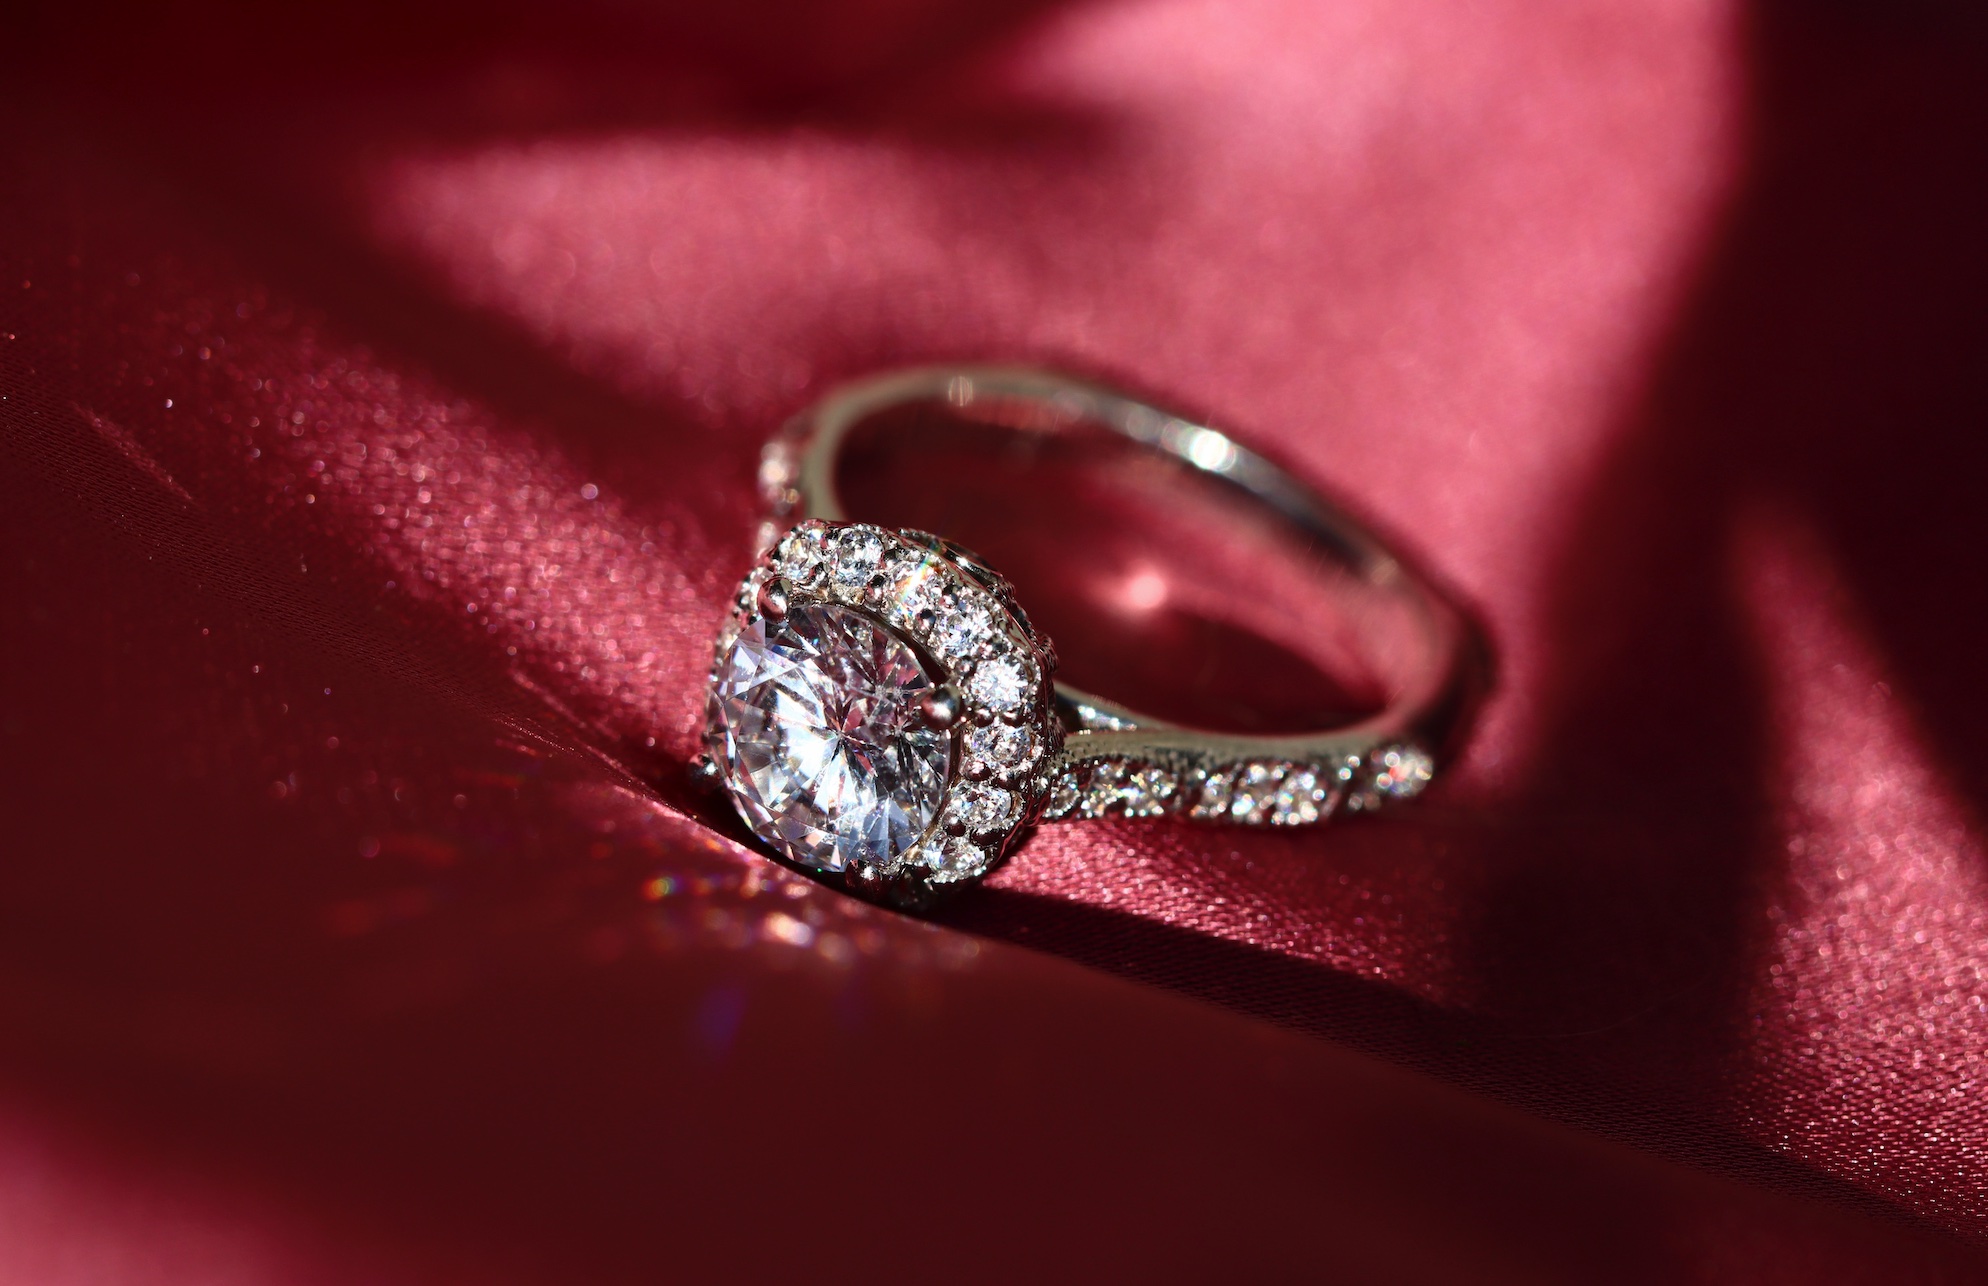 Diamond ring on red fabric background; image by Sabrianna, via Unsplash.com.